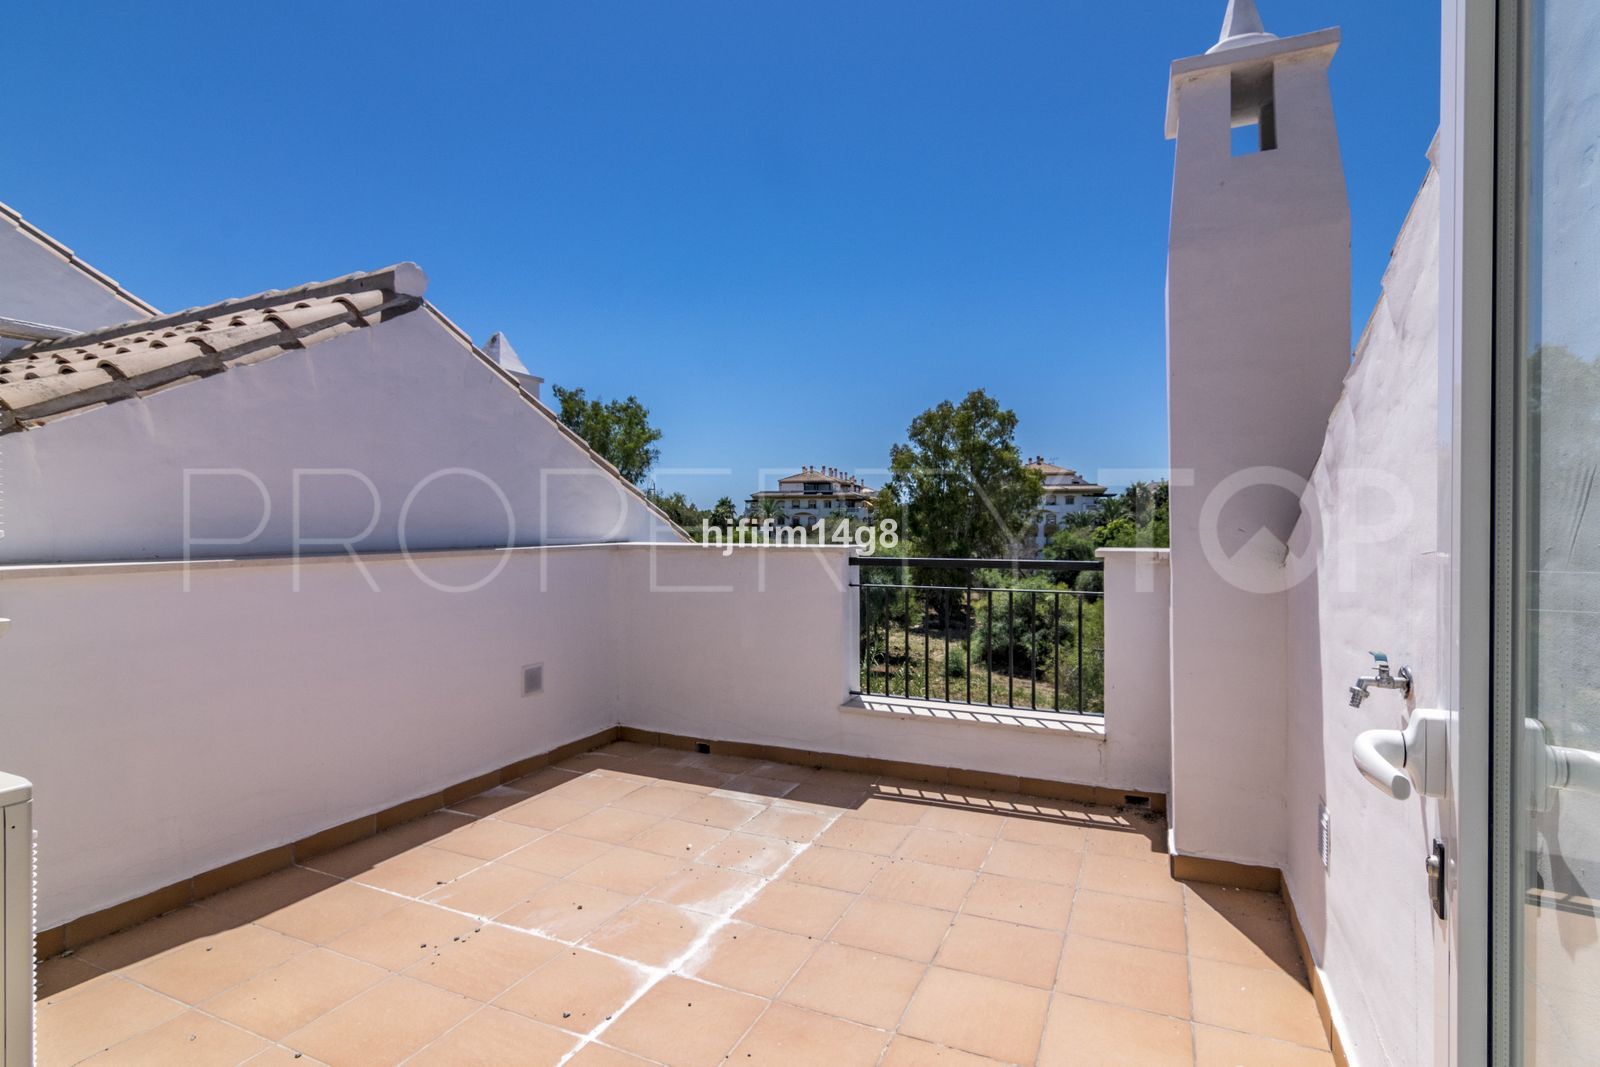 Town house for sale in Los Naranjos de Marbella with 3 bedrooms